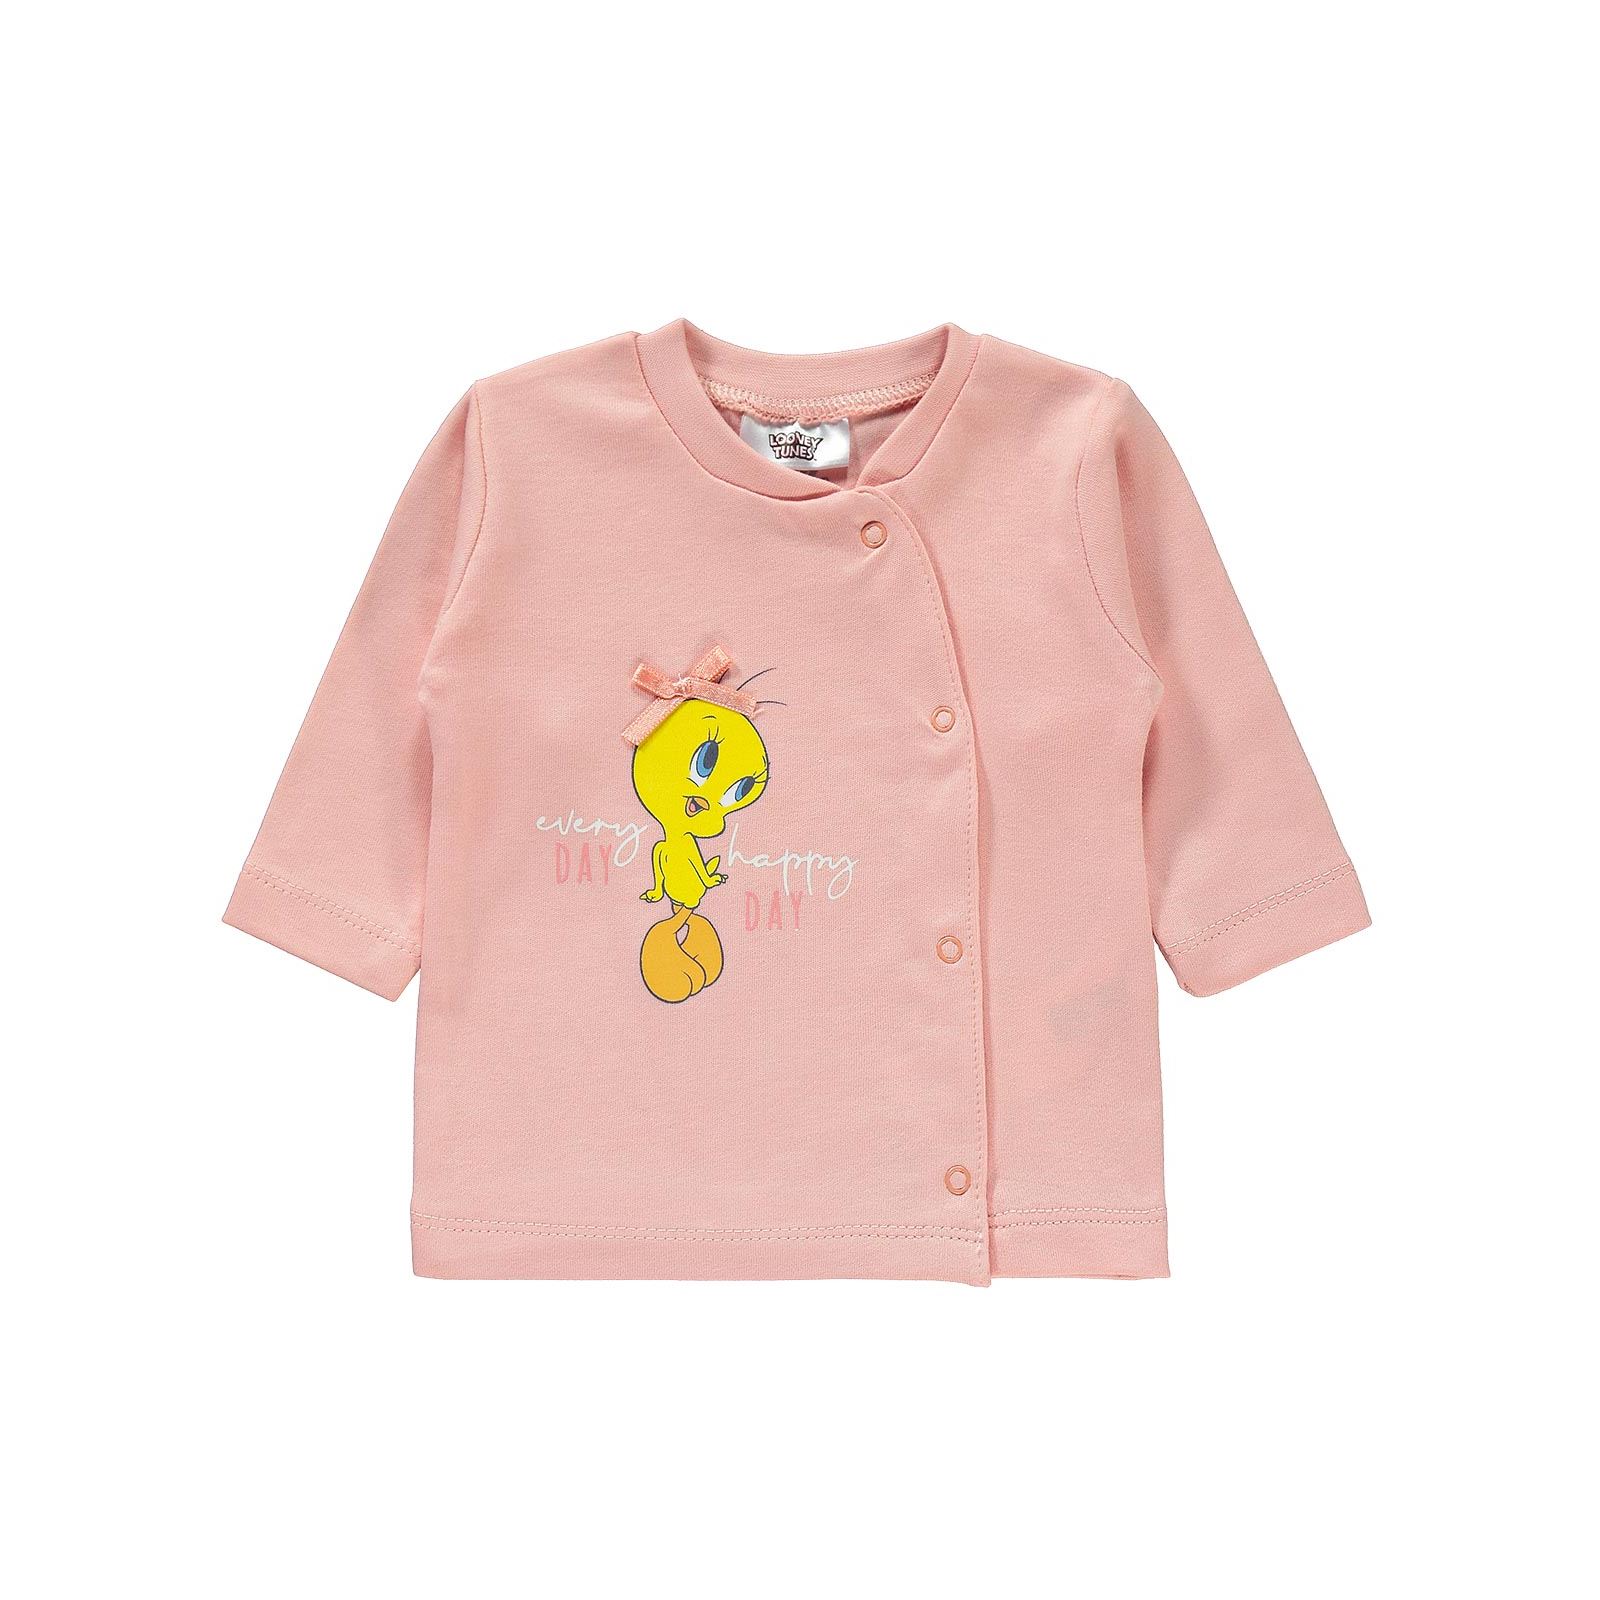 Tweety Kız Bebek Pijama Takımı 0-9 Ay Pembe